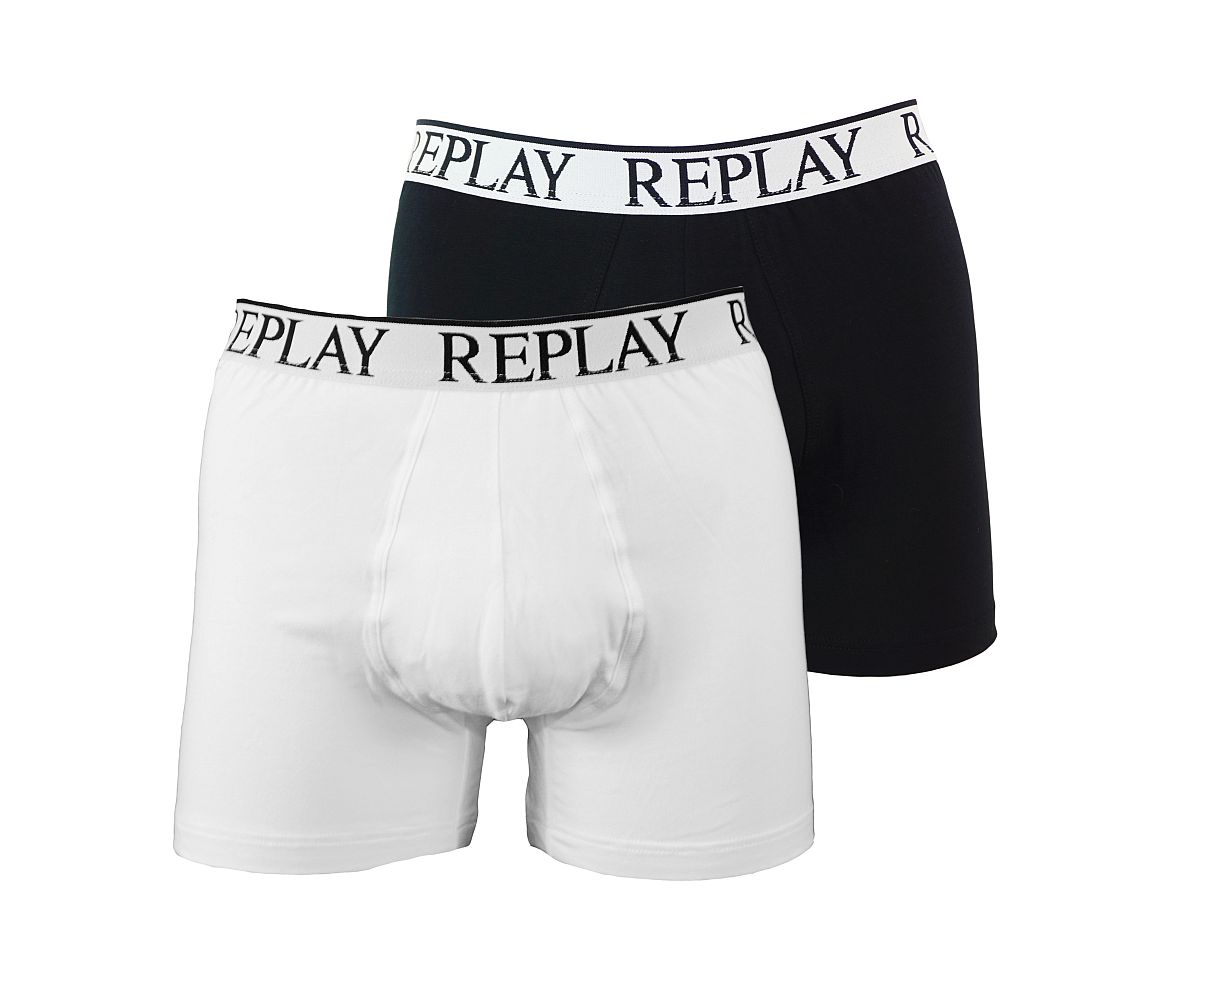 Replay 2er Pack Shorts Boxershorts M606001 001 schwarz weiss